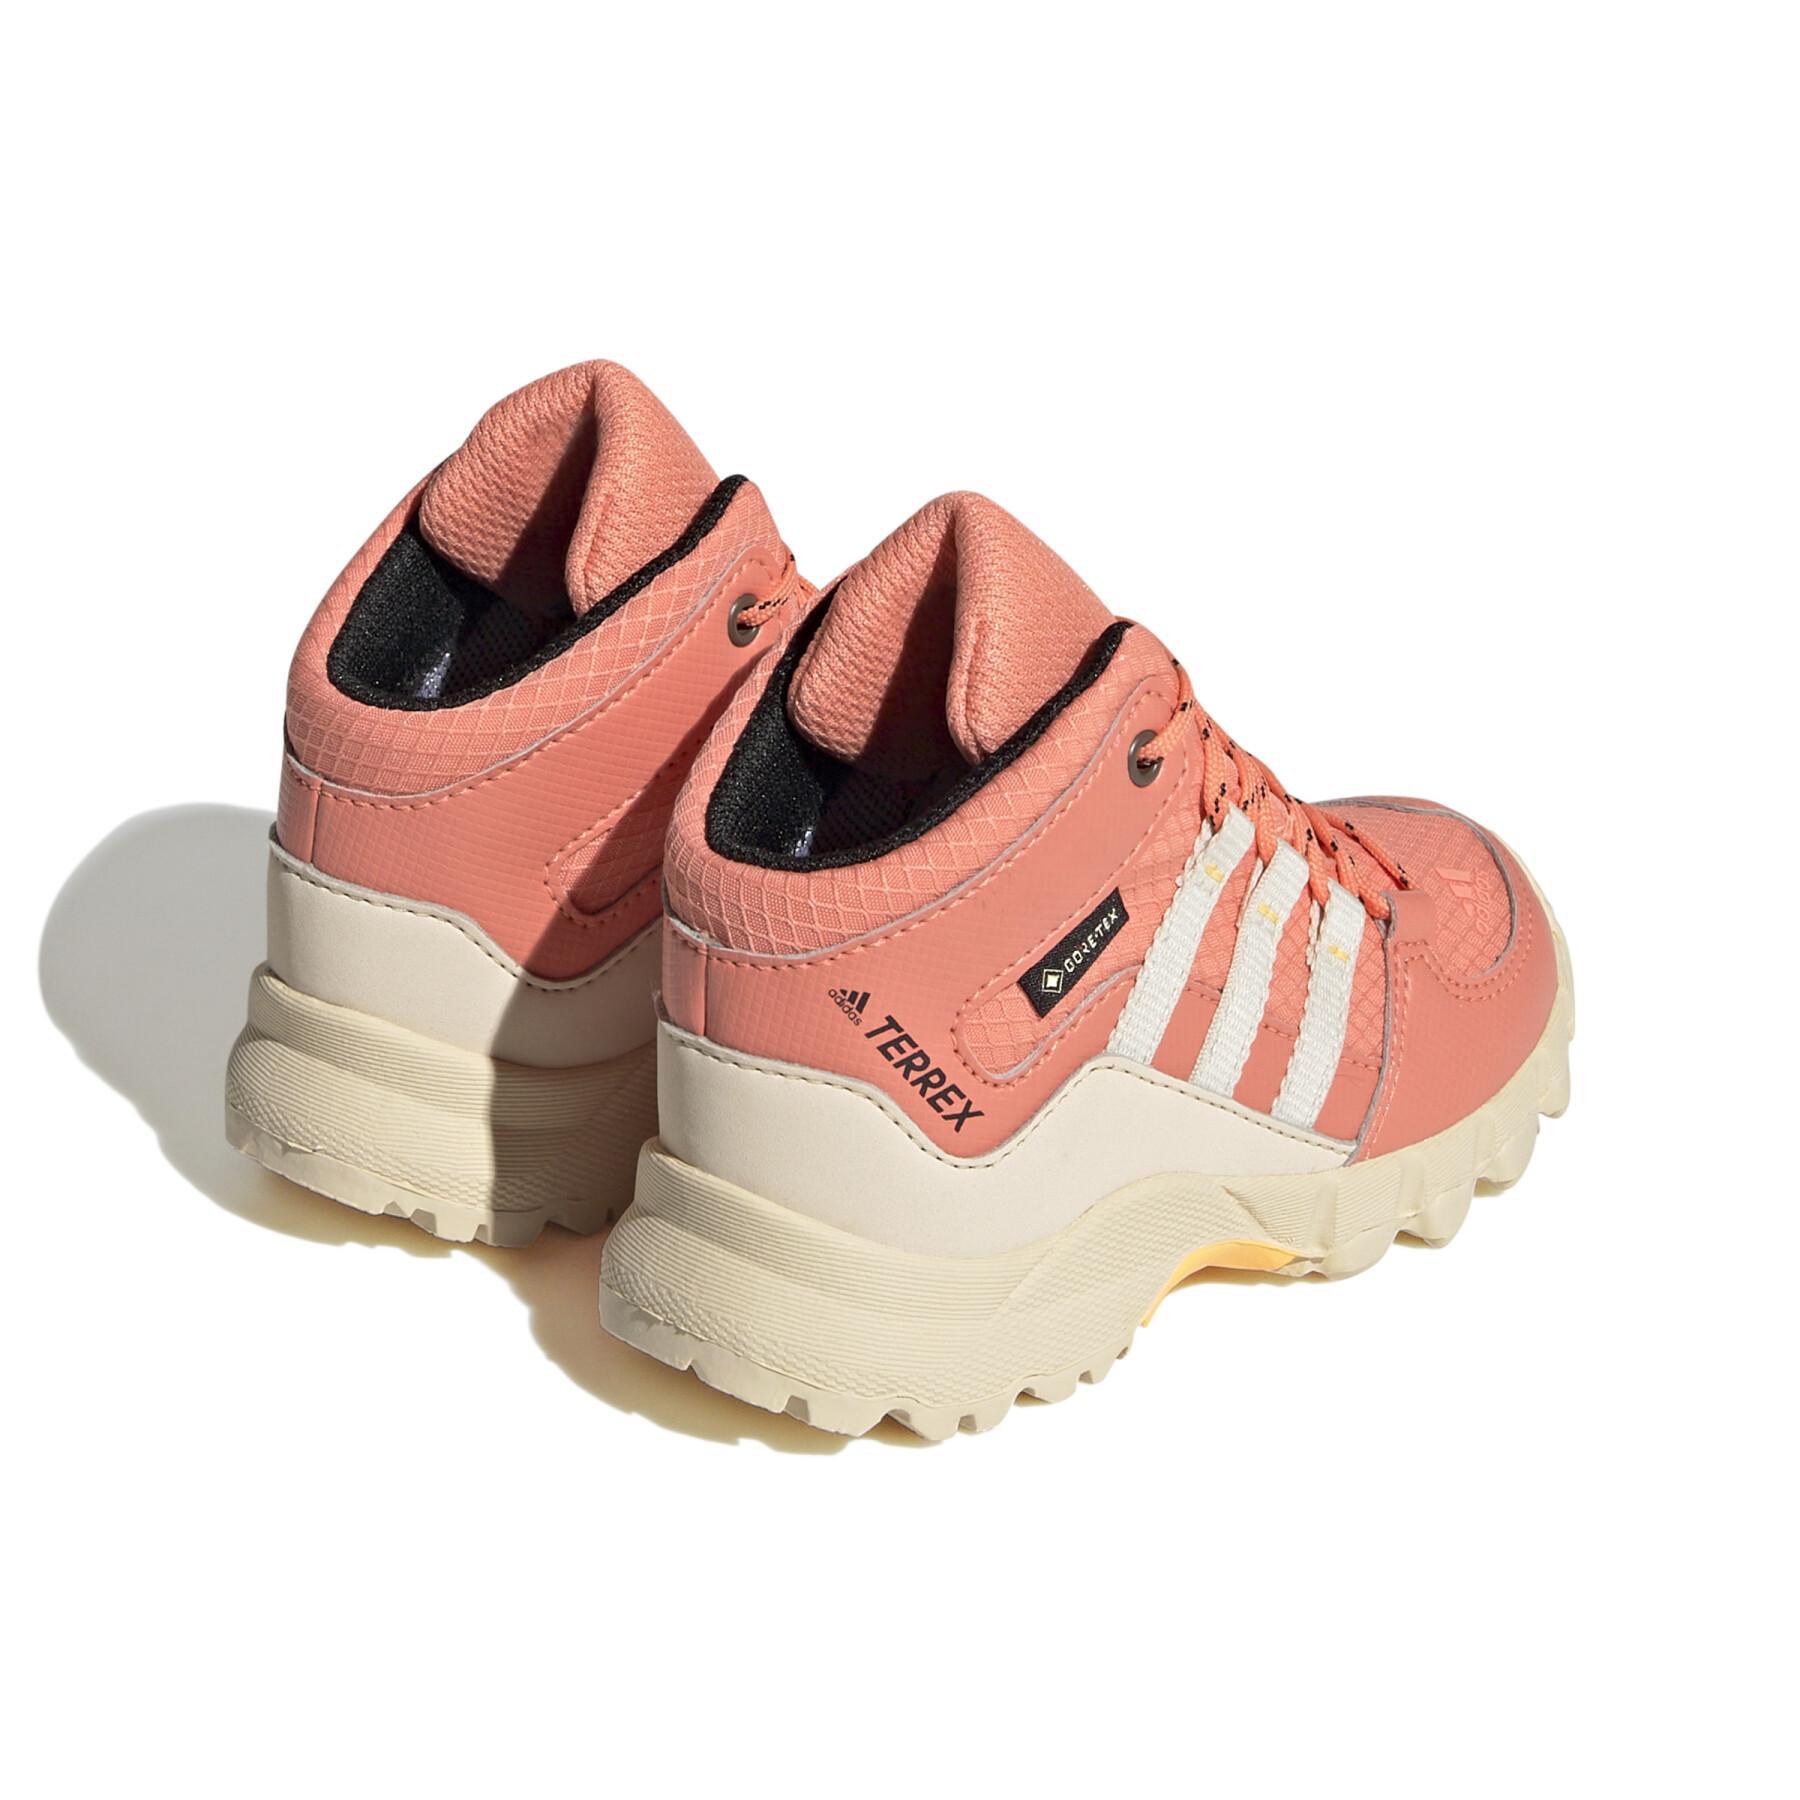 Chaussures de randonnée bébé fille adidas Terrex Mid GTX